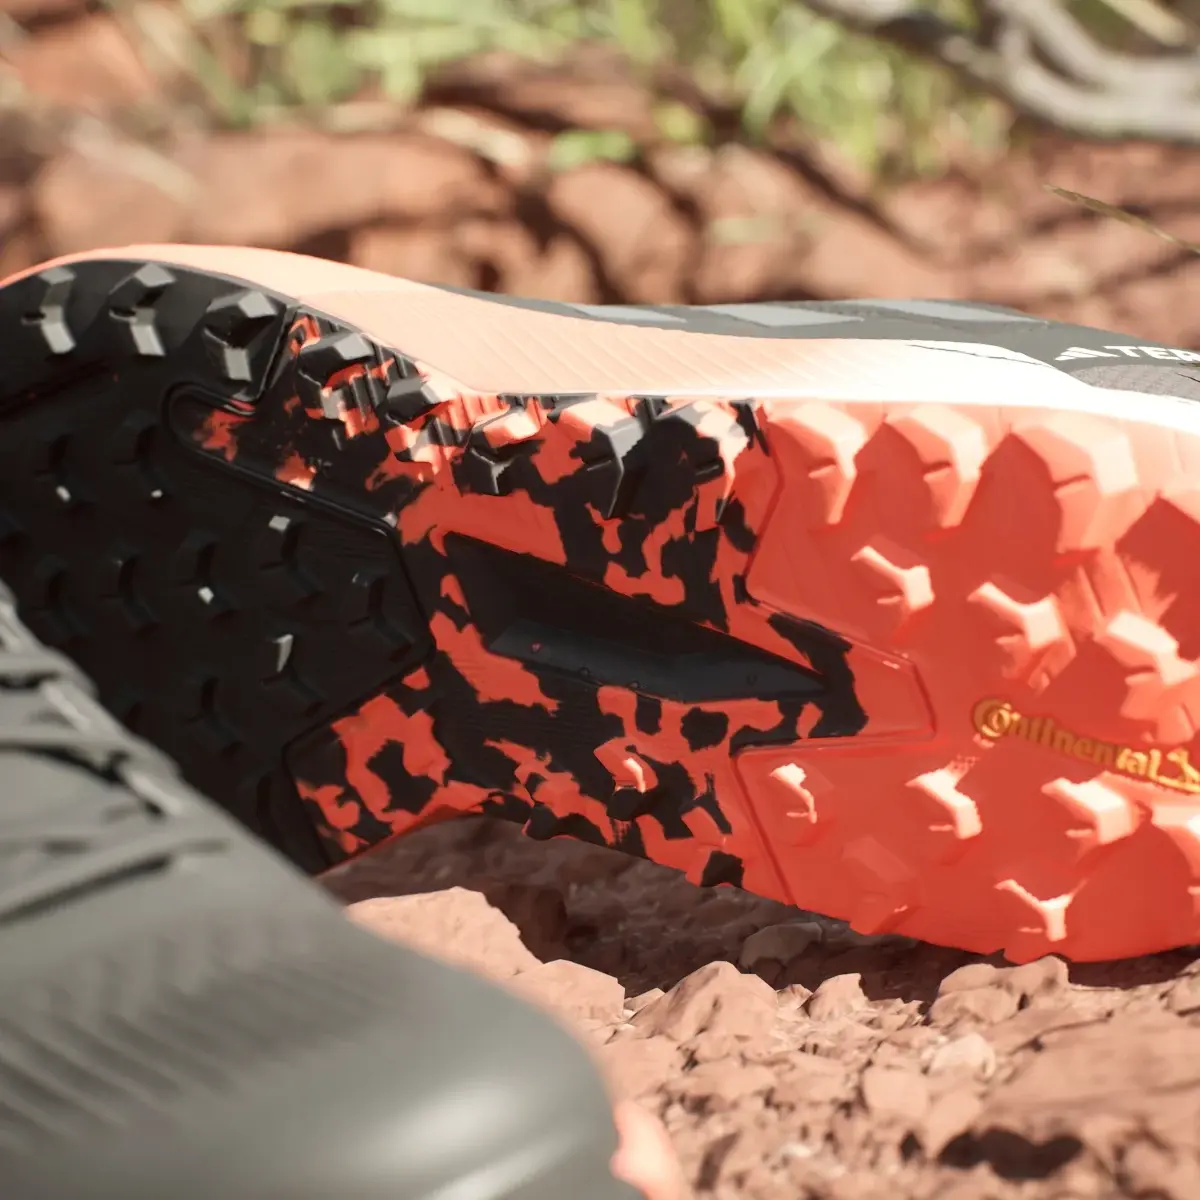 Adidas Chaussure de trail running Terrex Agravic Flow 2.0. 2